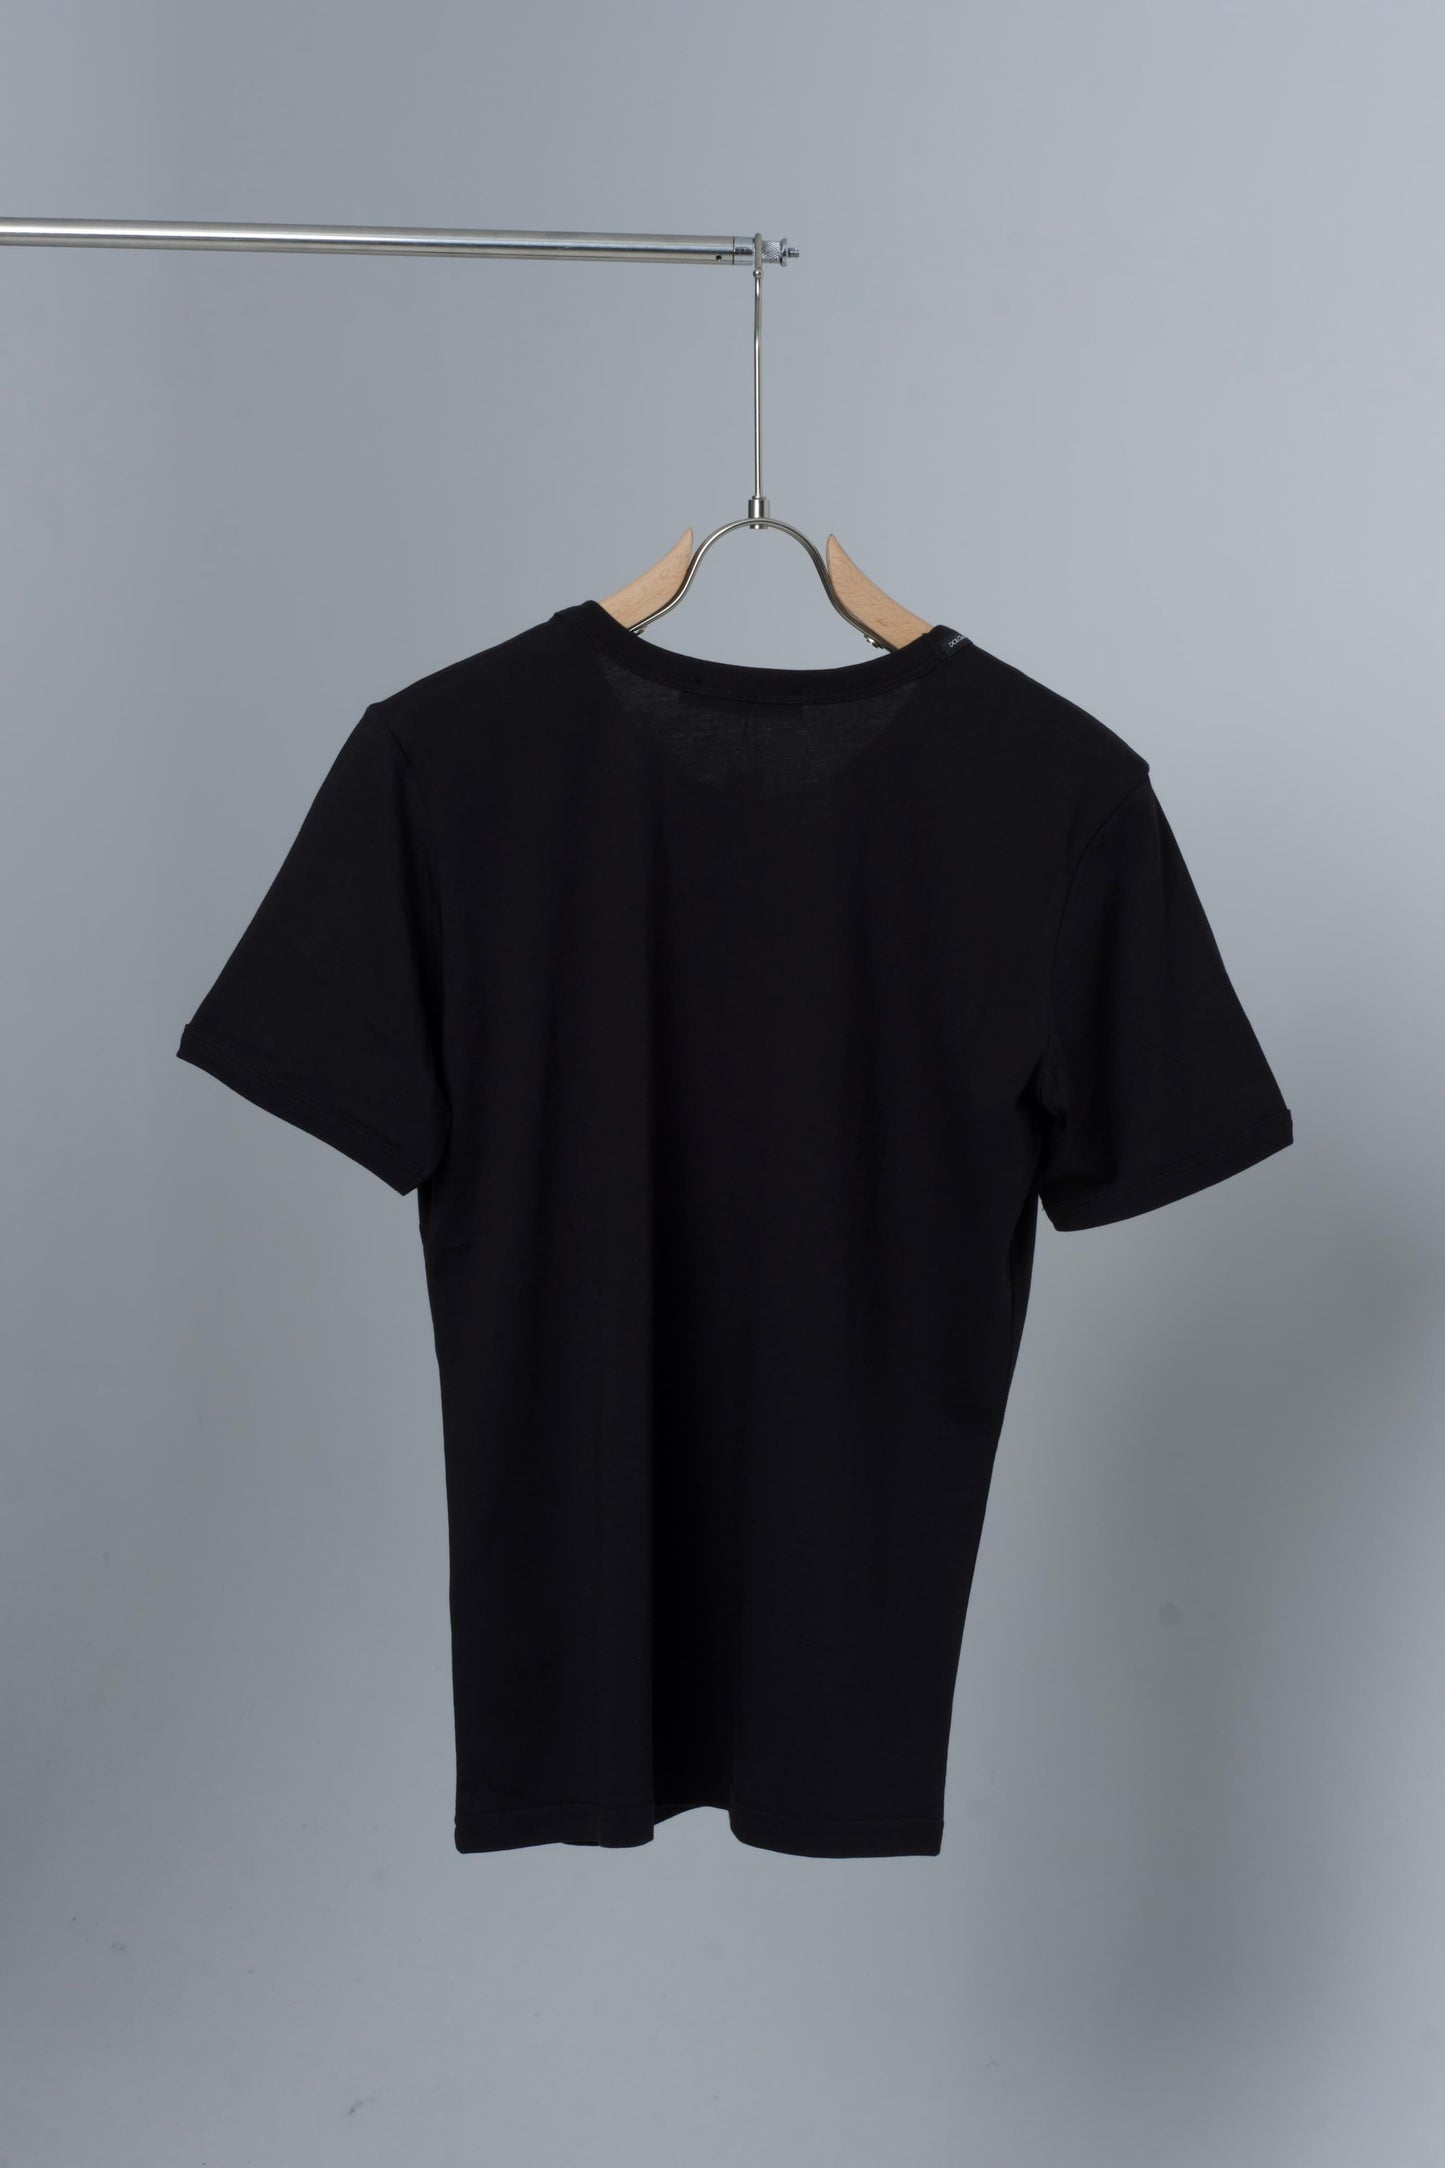 Dolce&Gabbana Black Slimfit Tshirt For Men